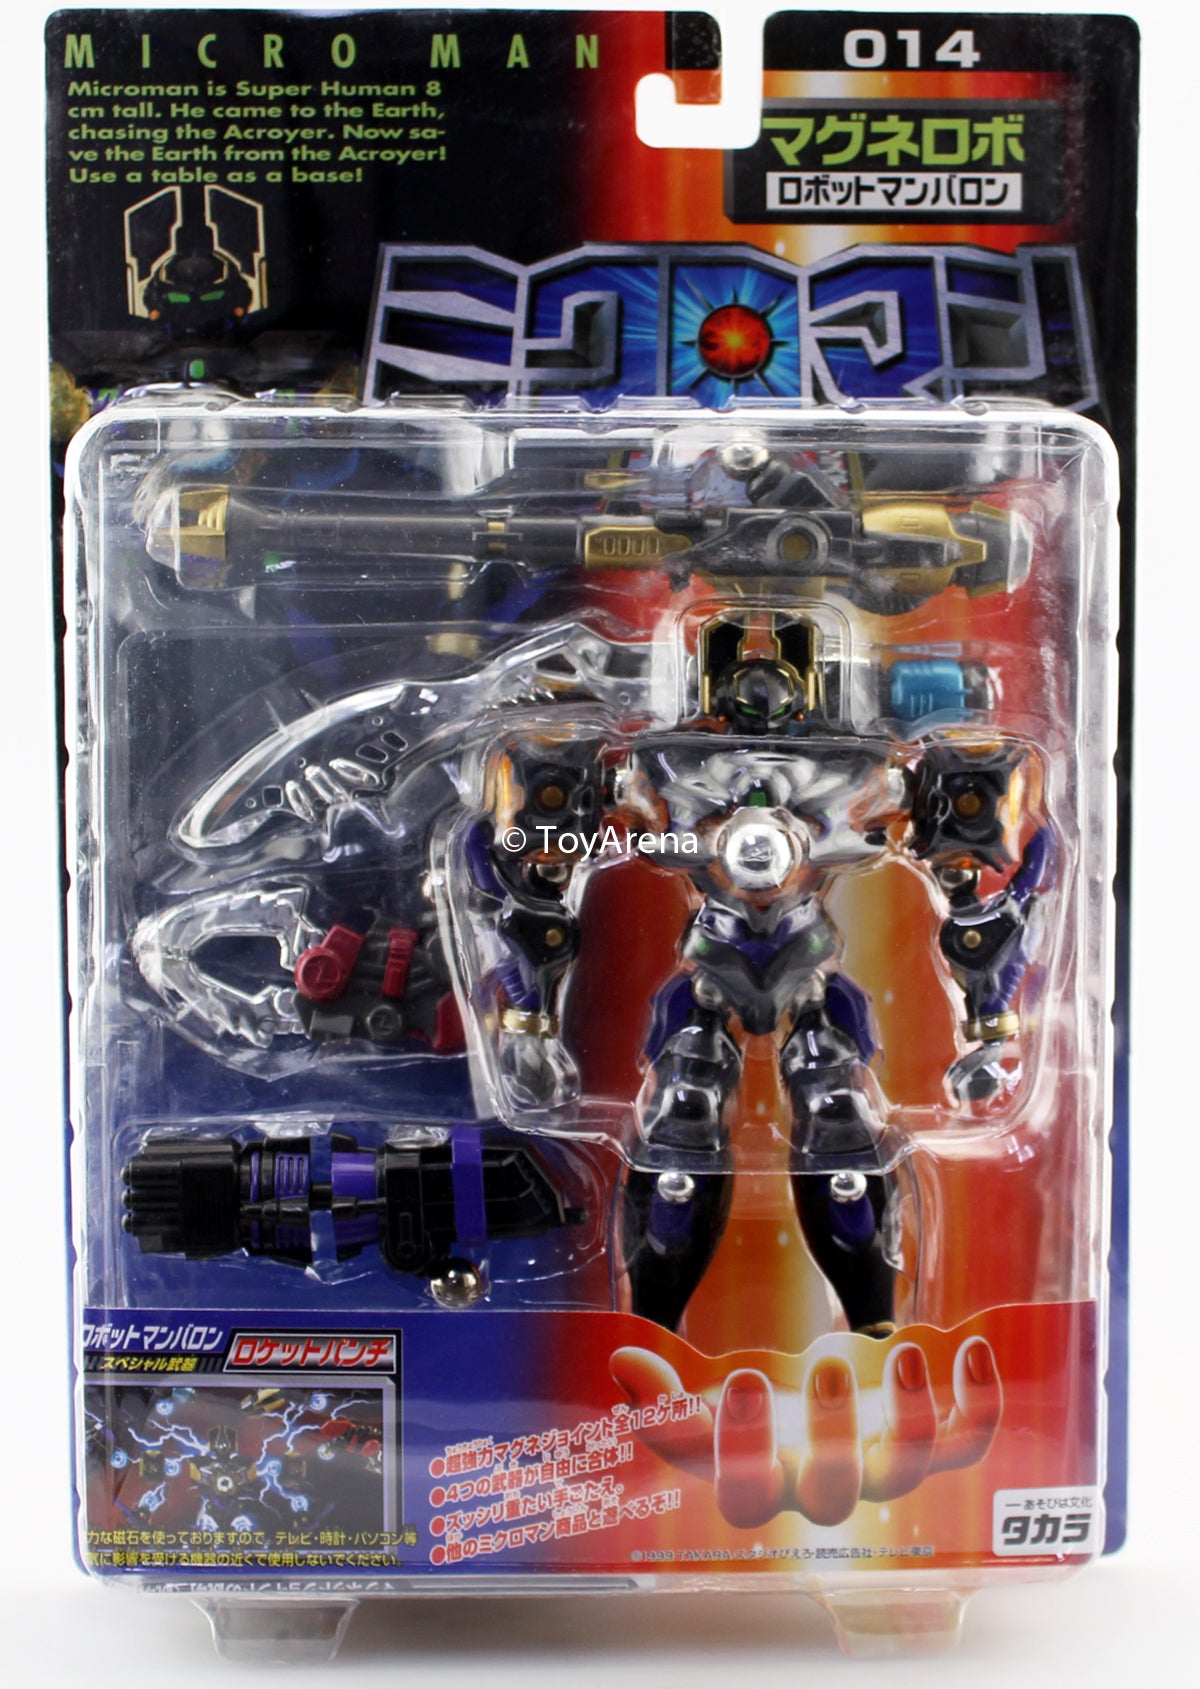 Microman 014 Baron Magne-Robo RobotMan Action Figure | ToyArena